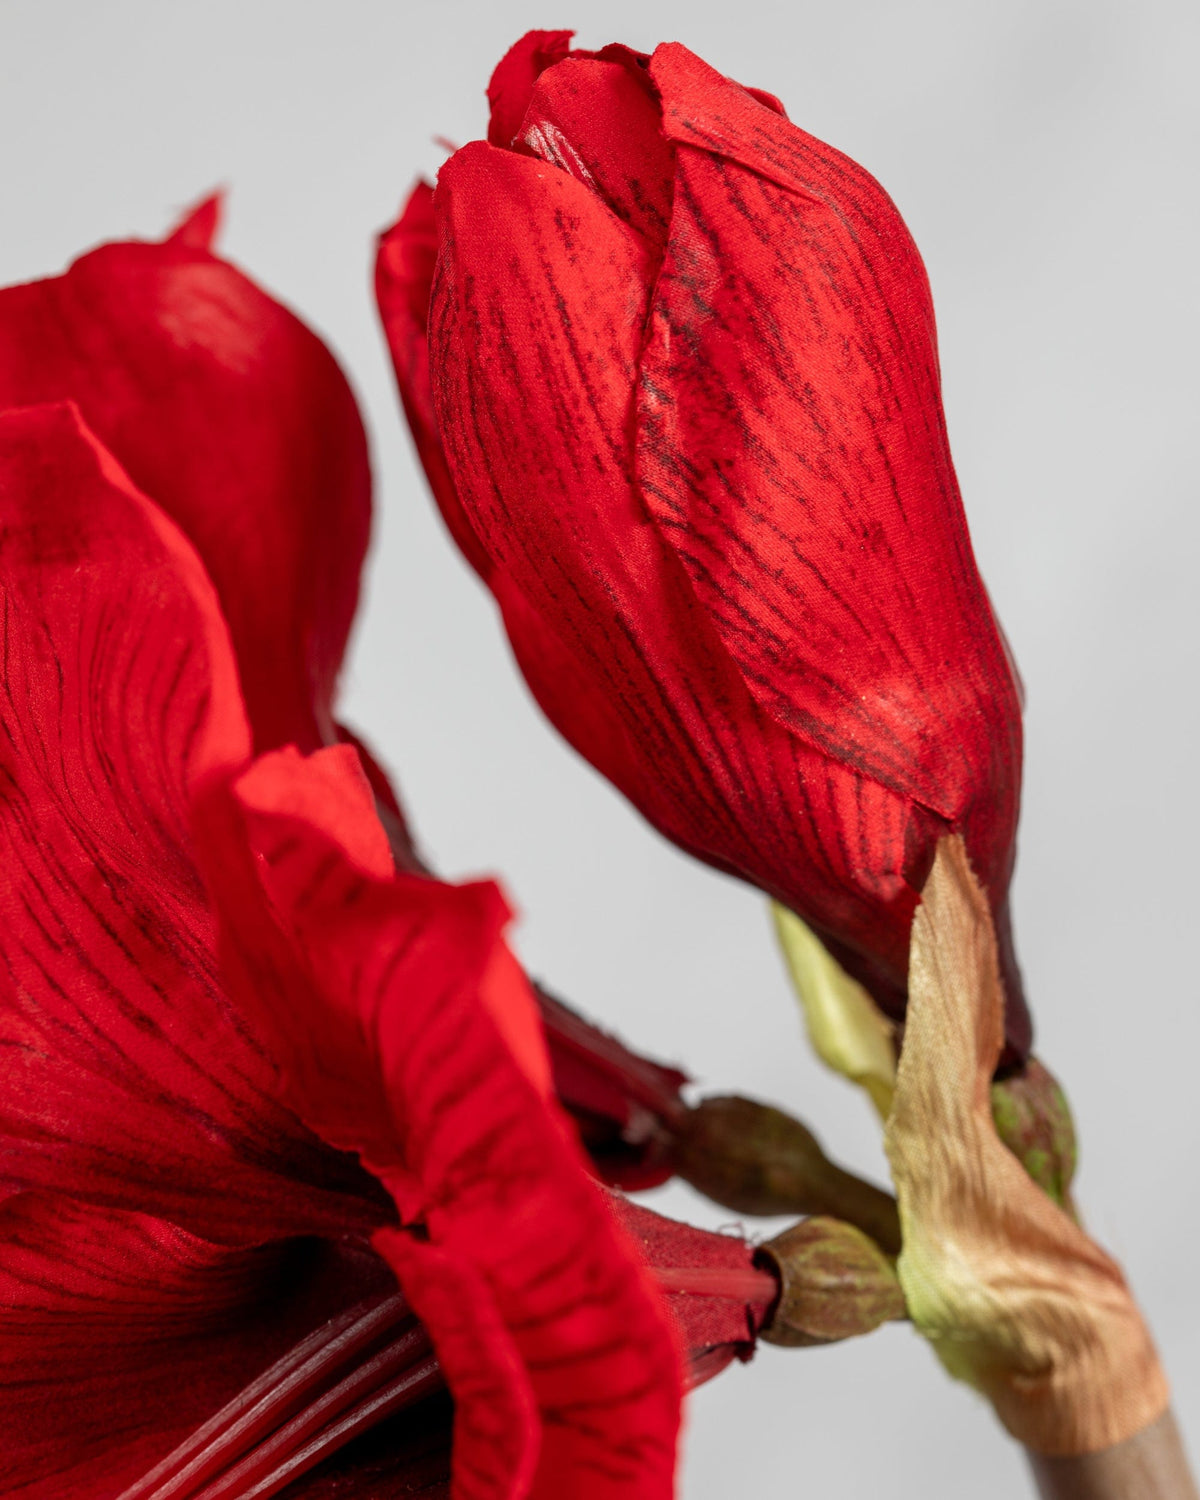 Prestige Botanicals Artificial Red Amaryllis close up